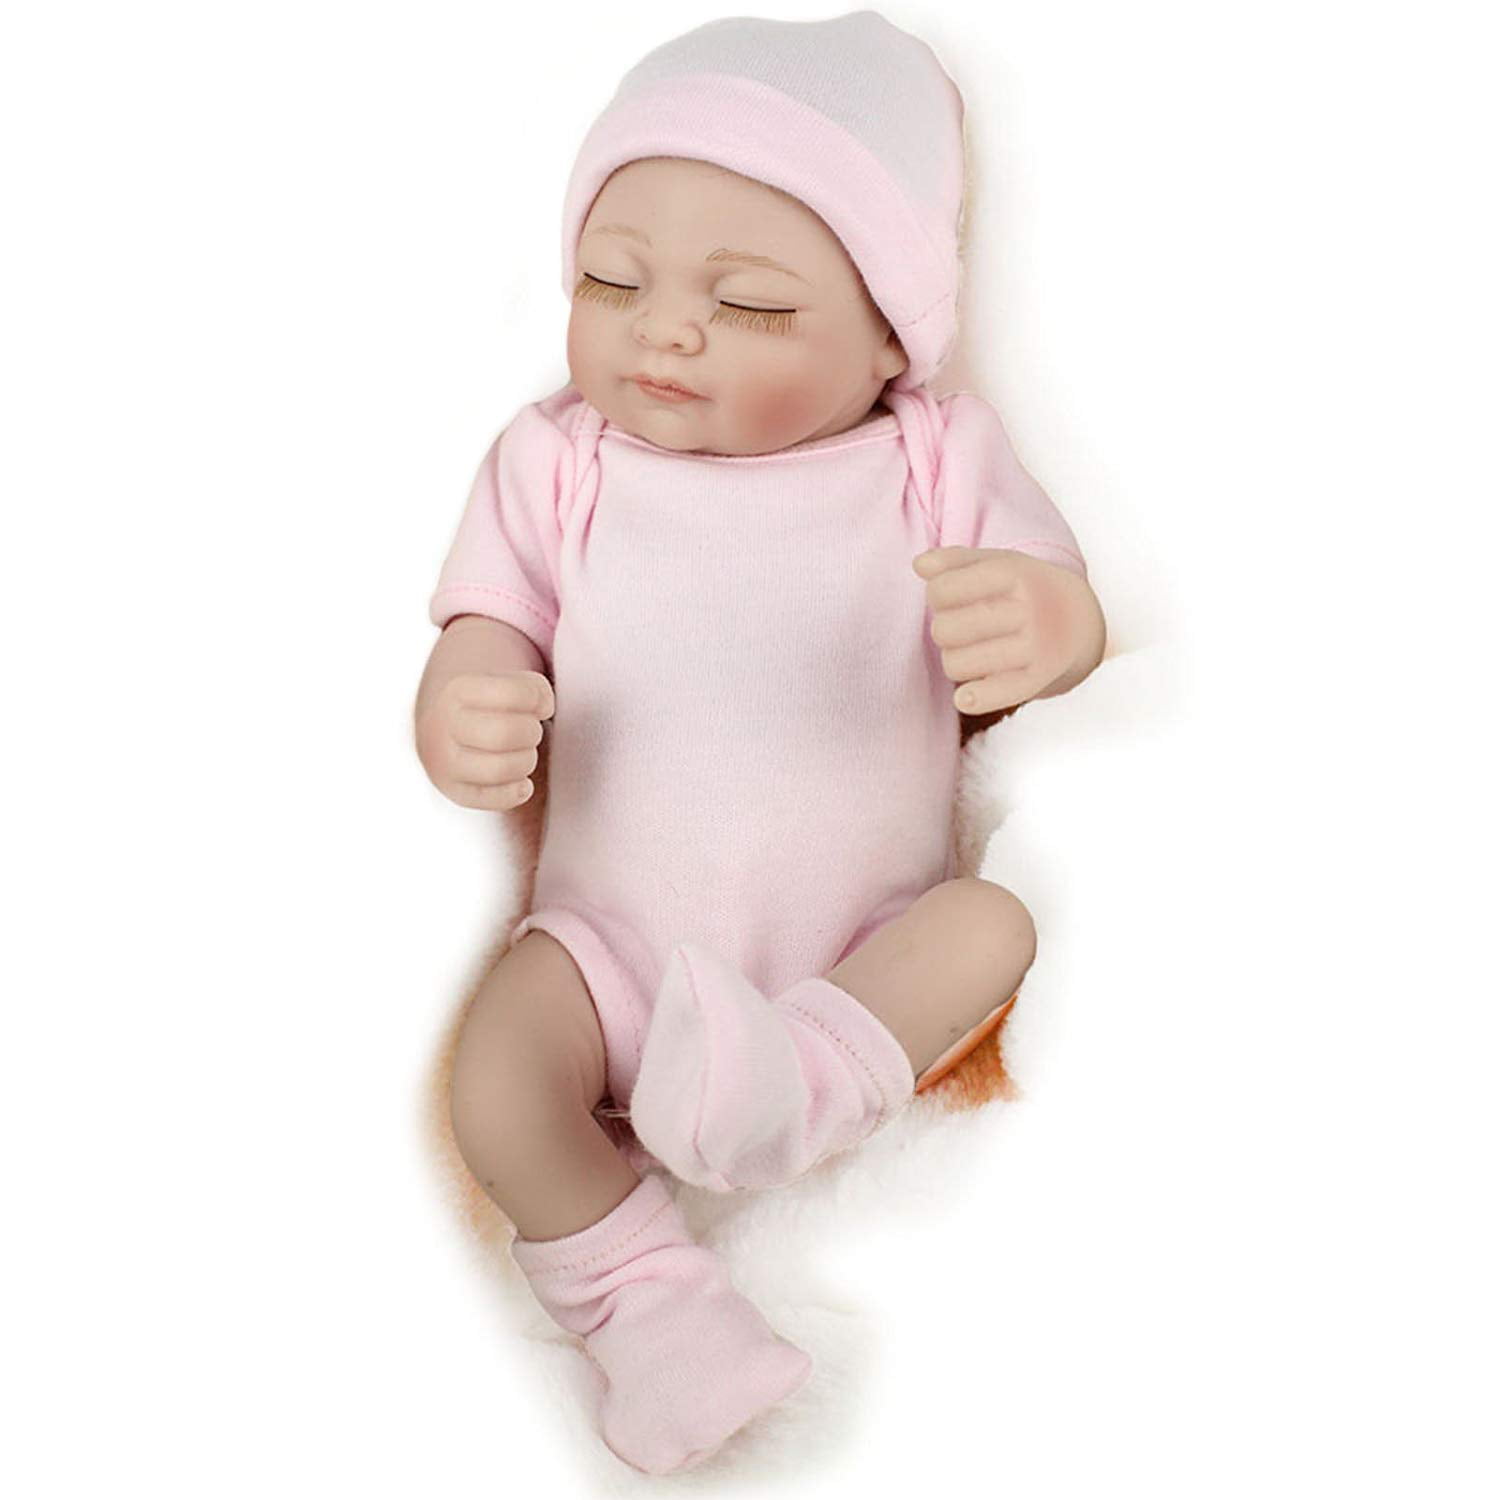 Tiny Reborn Baby Dolls Silicone Full Body Anatomically Correct 11" Kids Bath Toy 